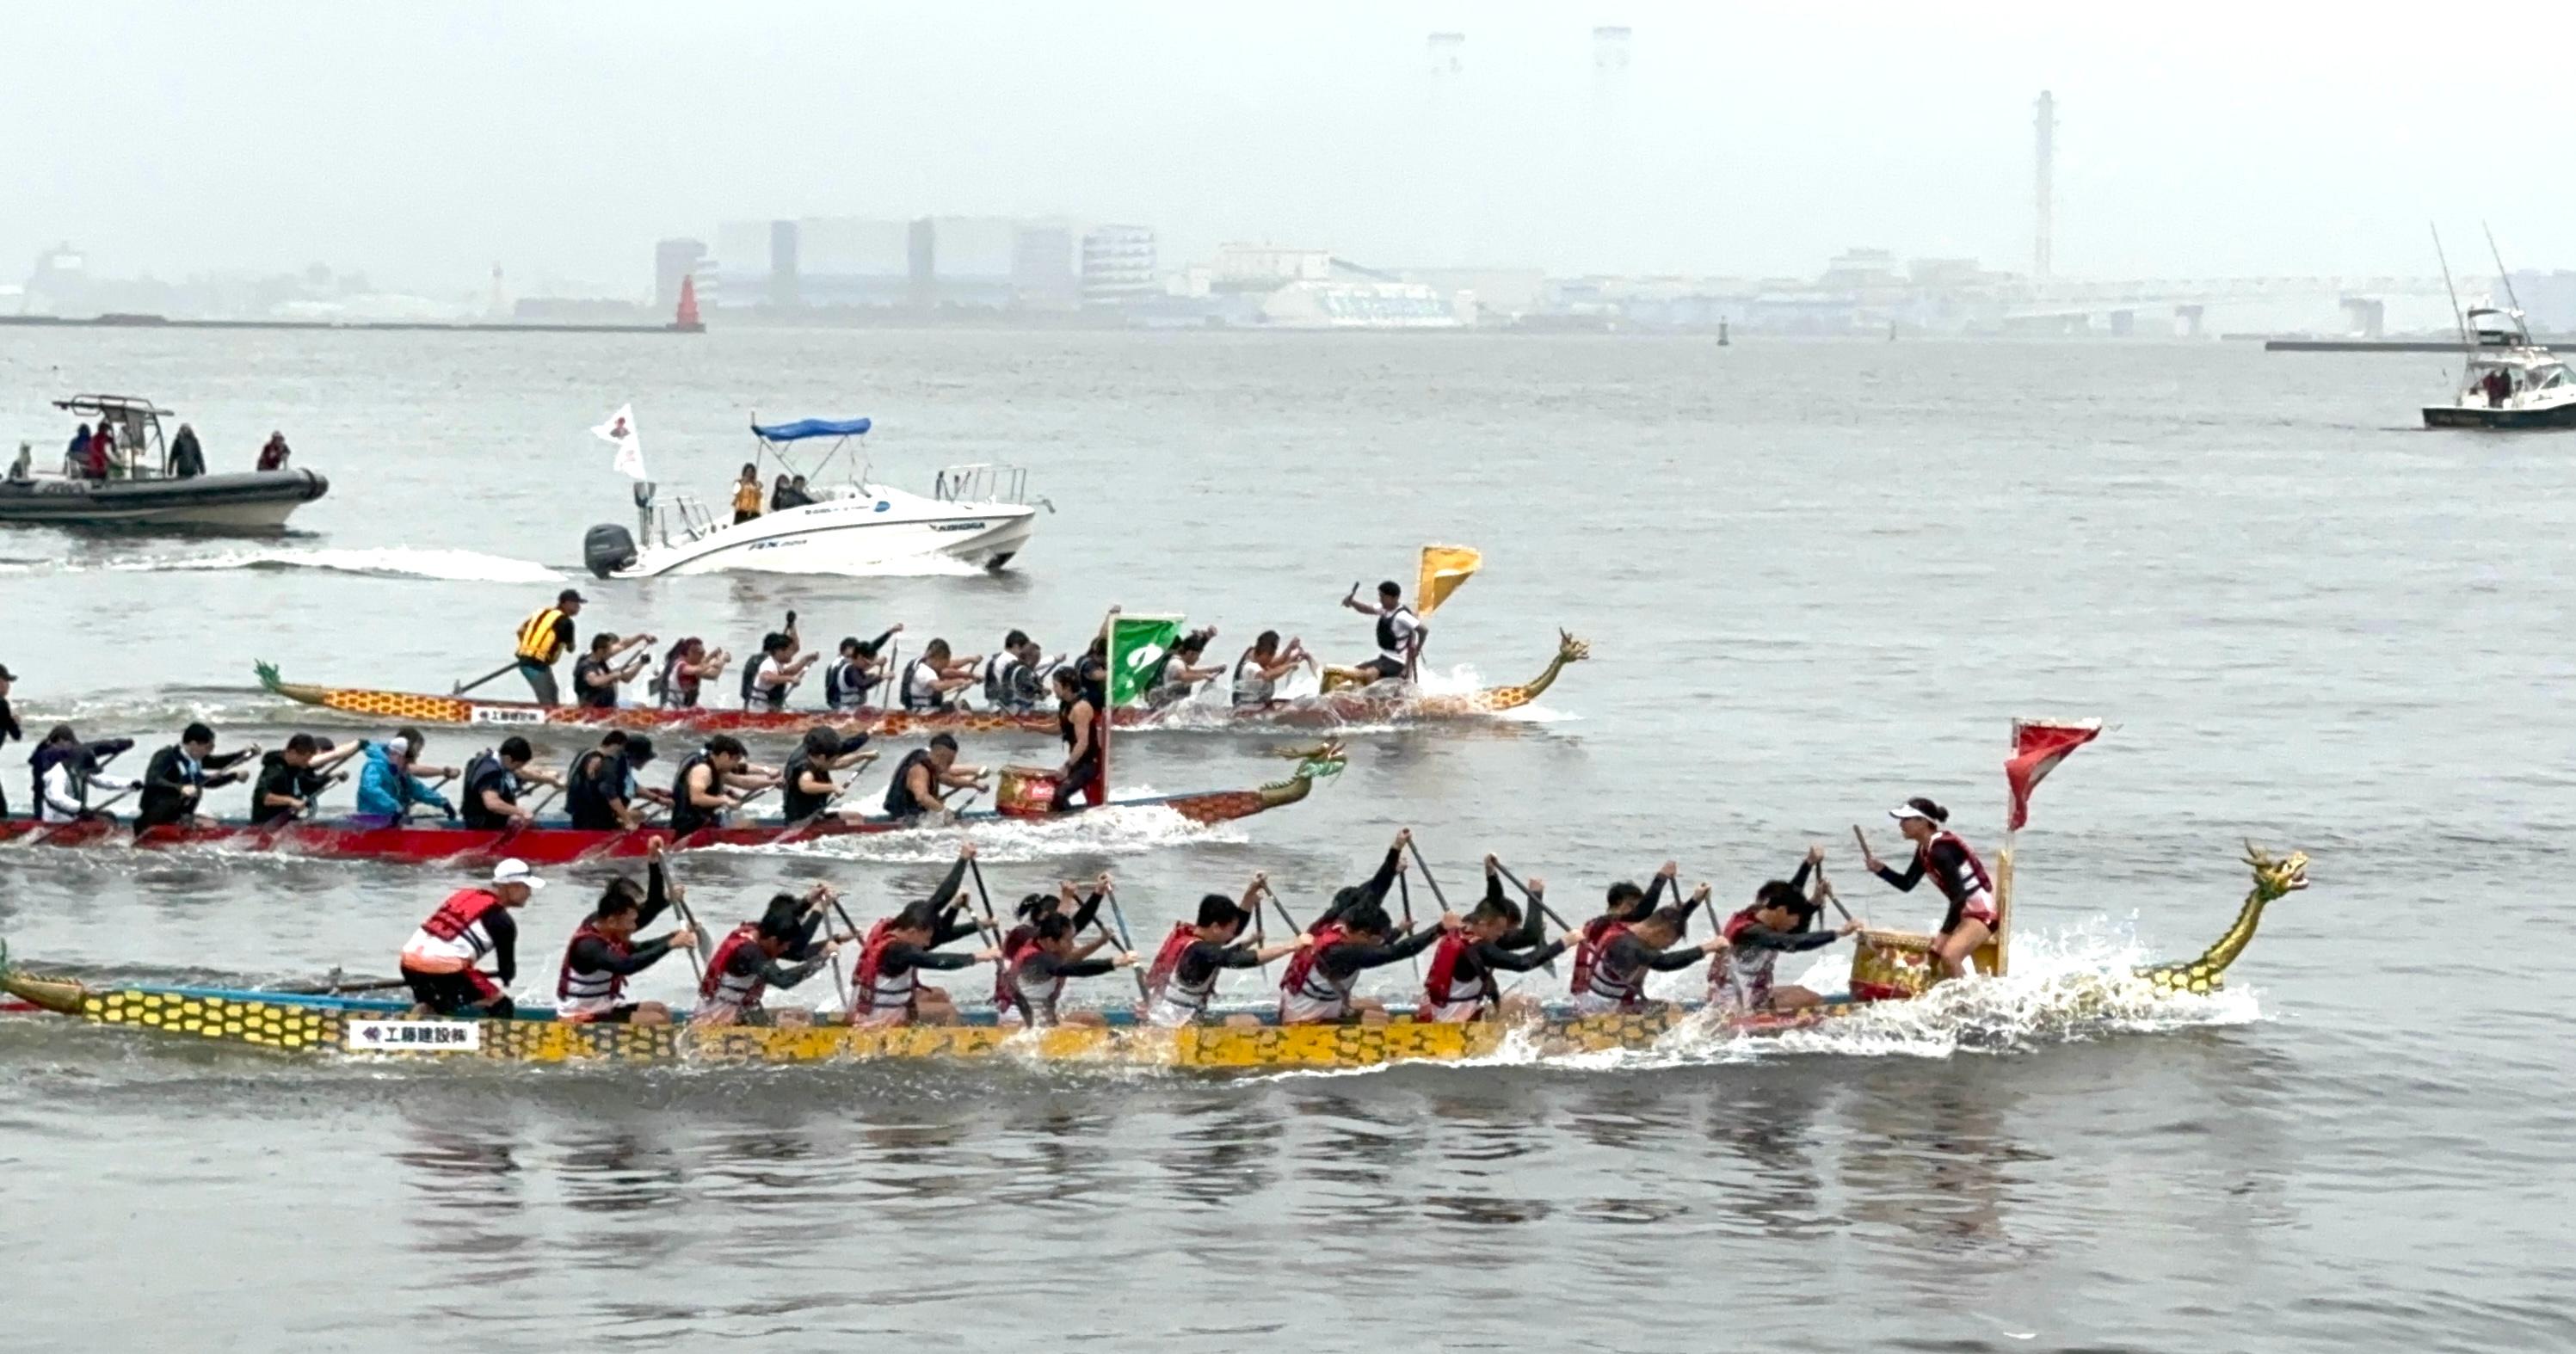 The Hong Kong Cup dragon boat race was held at the promenade of Yamashita Park in Yokohama, Japan, today (June 2). Photo shows paddlers competing for the Hong Kong Cup at the Yokohama Dragon Boat Races.